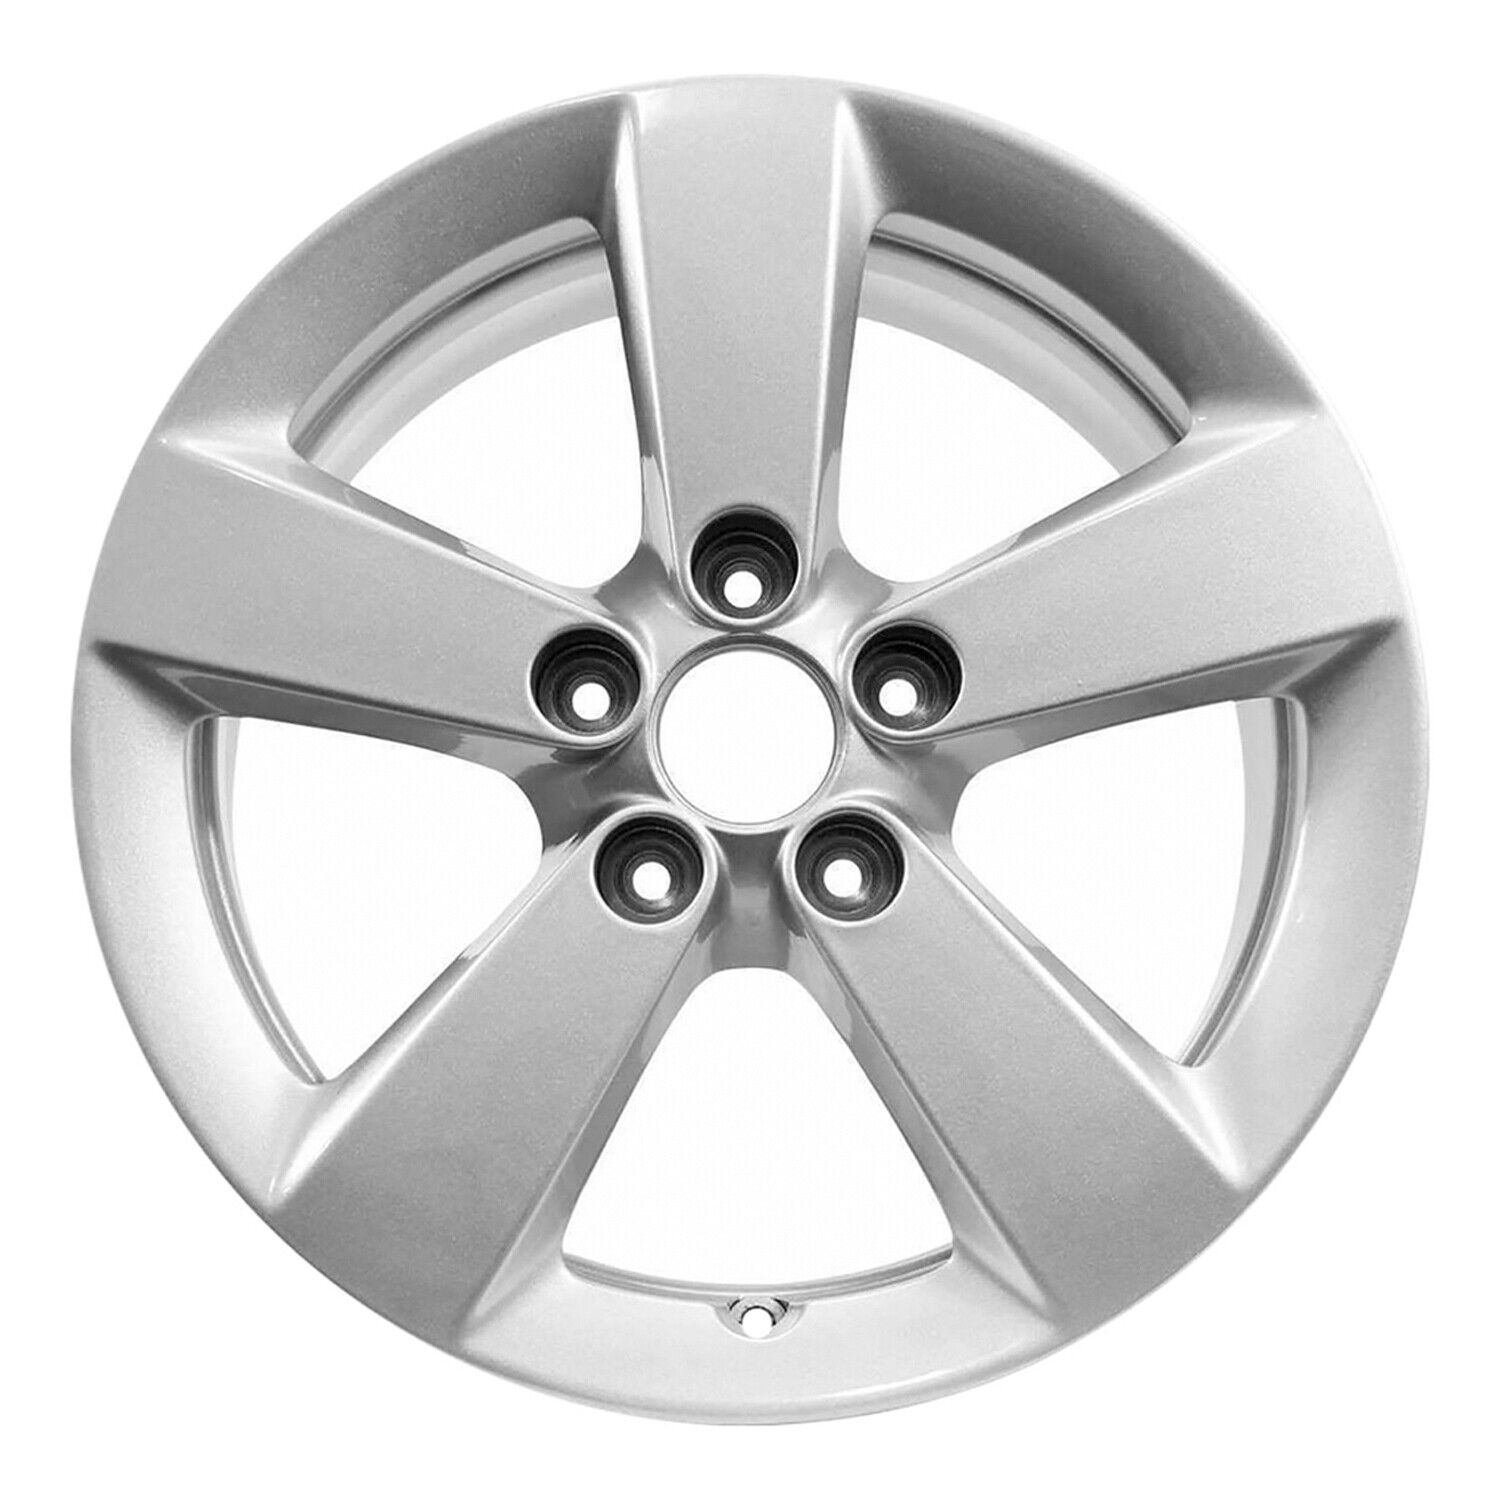 02483 Reconditioned OEM Aluminum Wheel 16x7 fits 2013-2016 Dodge Dart